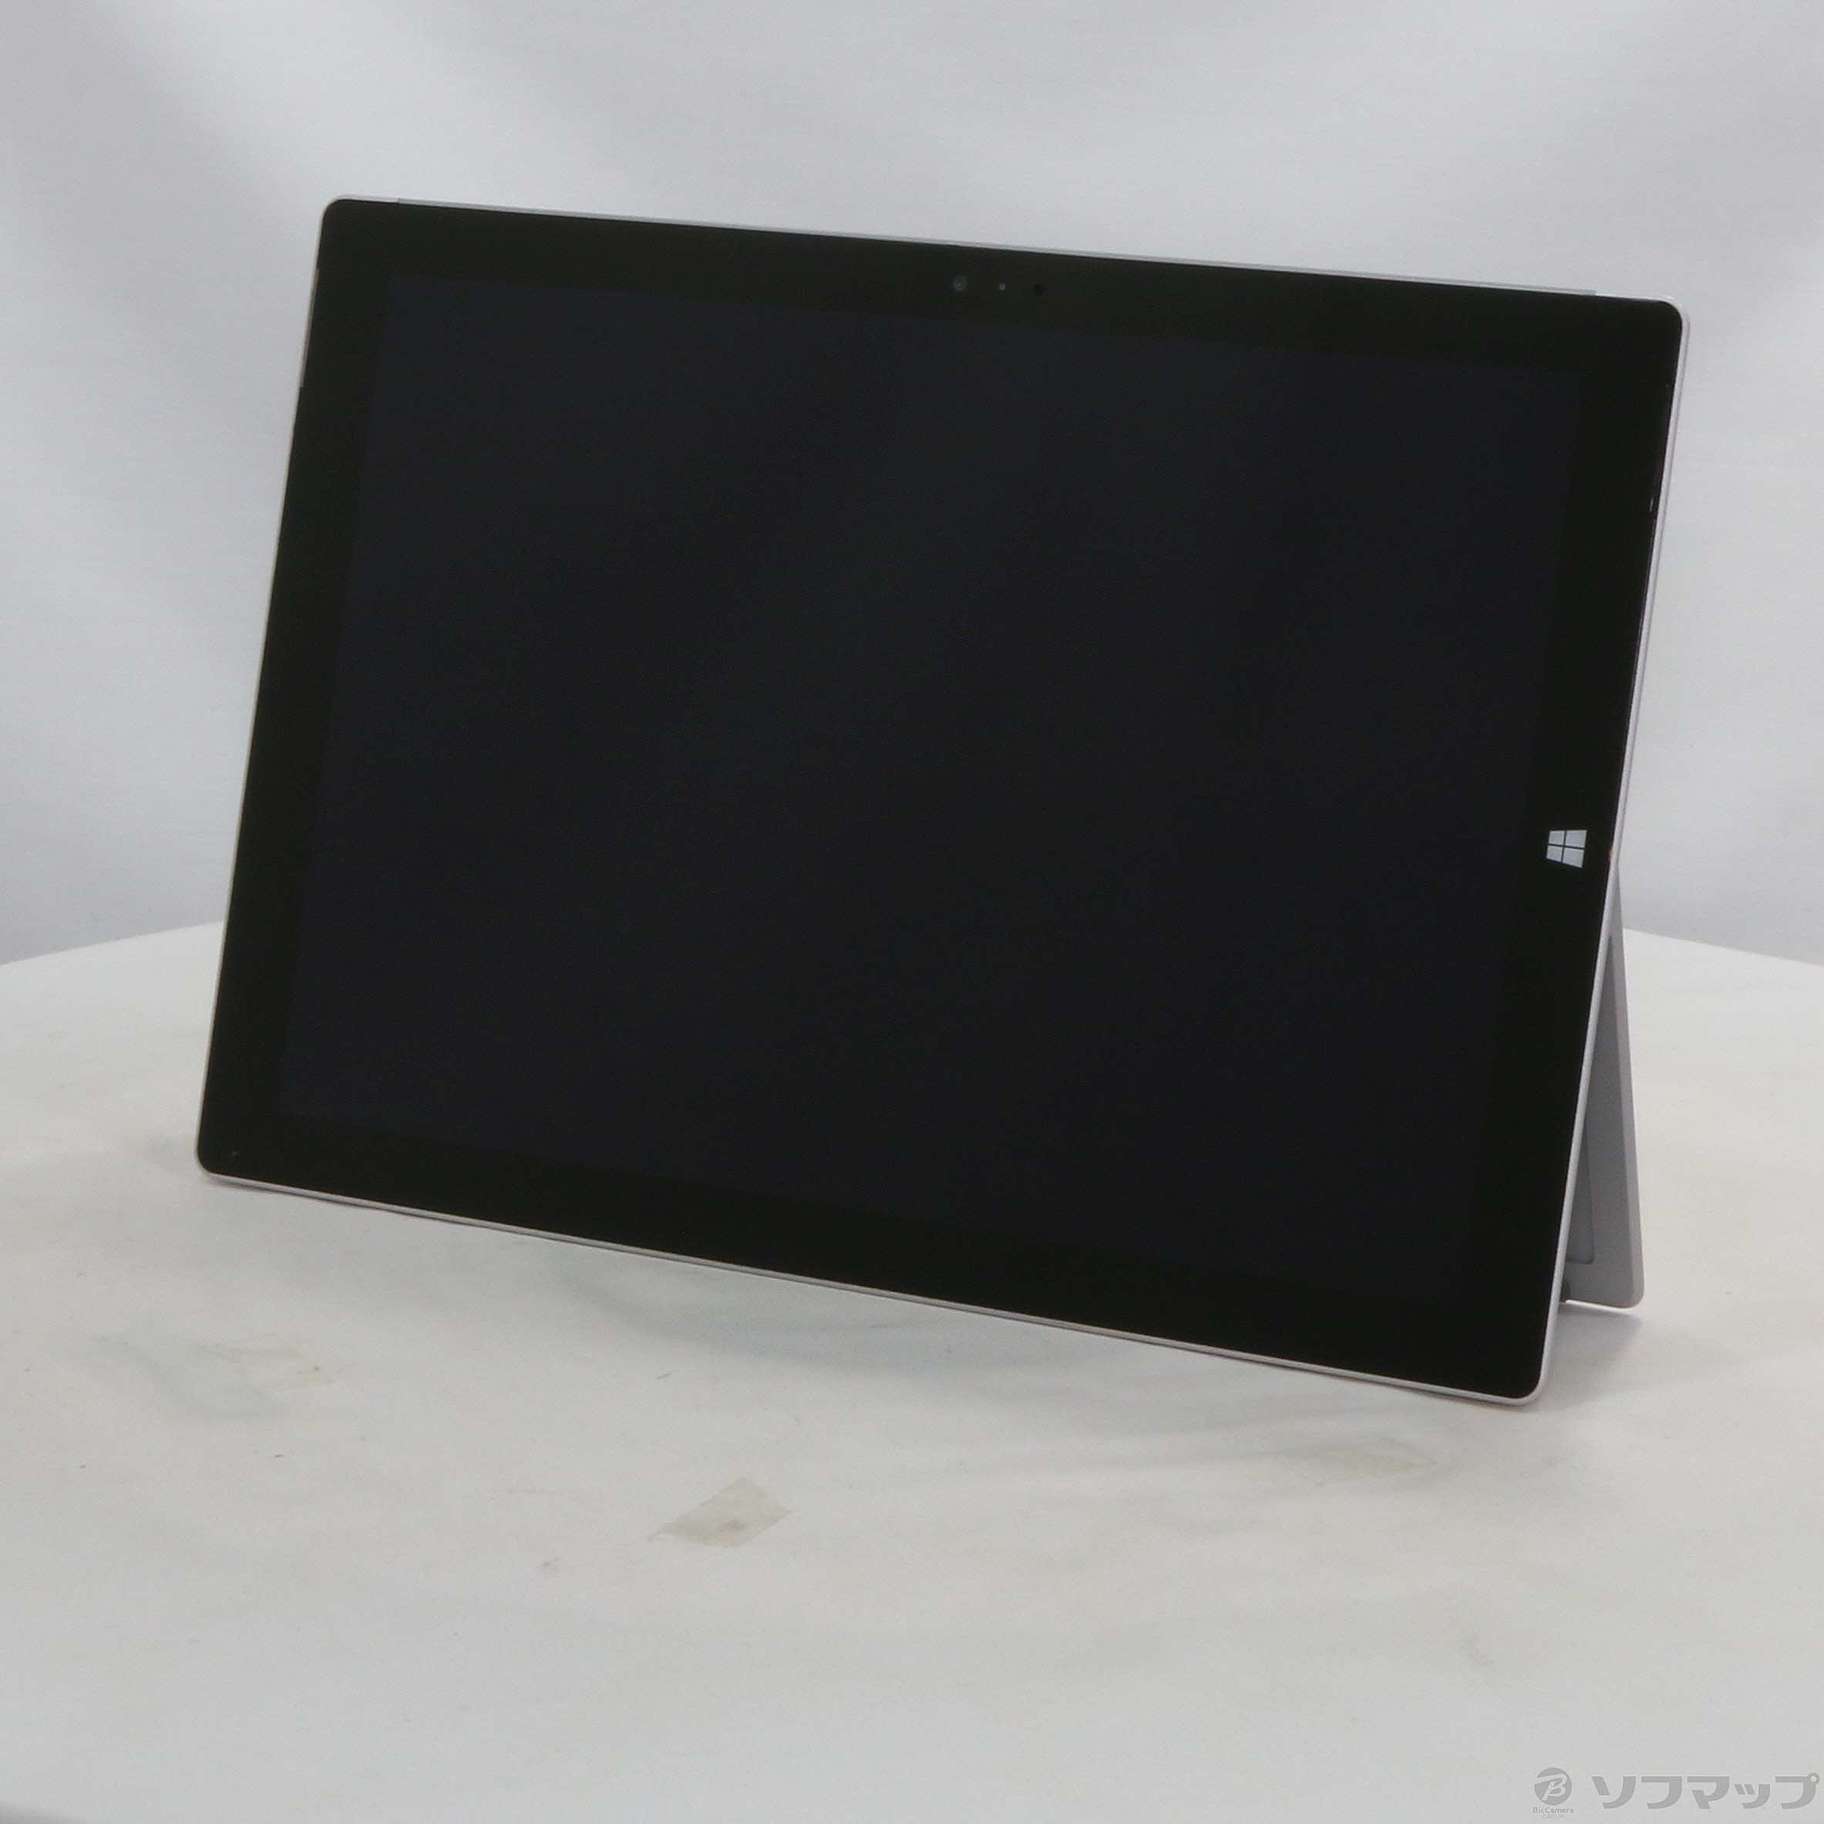 Microsoft Surface Pro3 Core i5 8GB 256GB